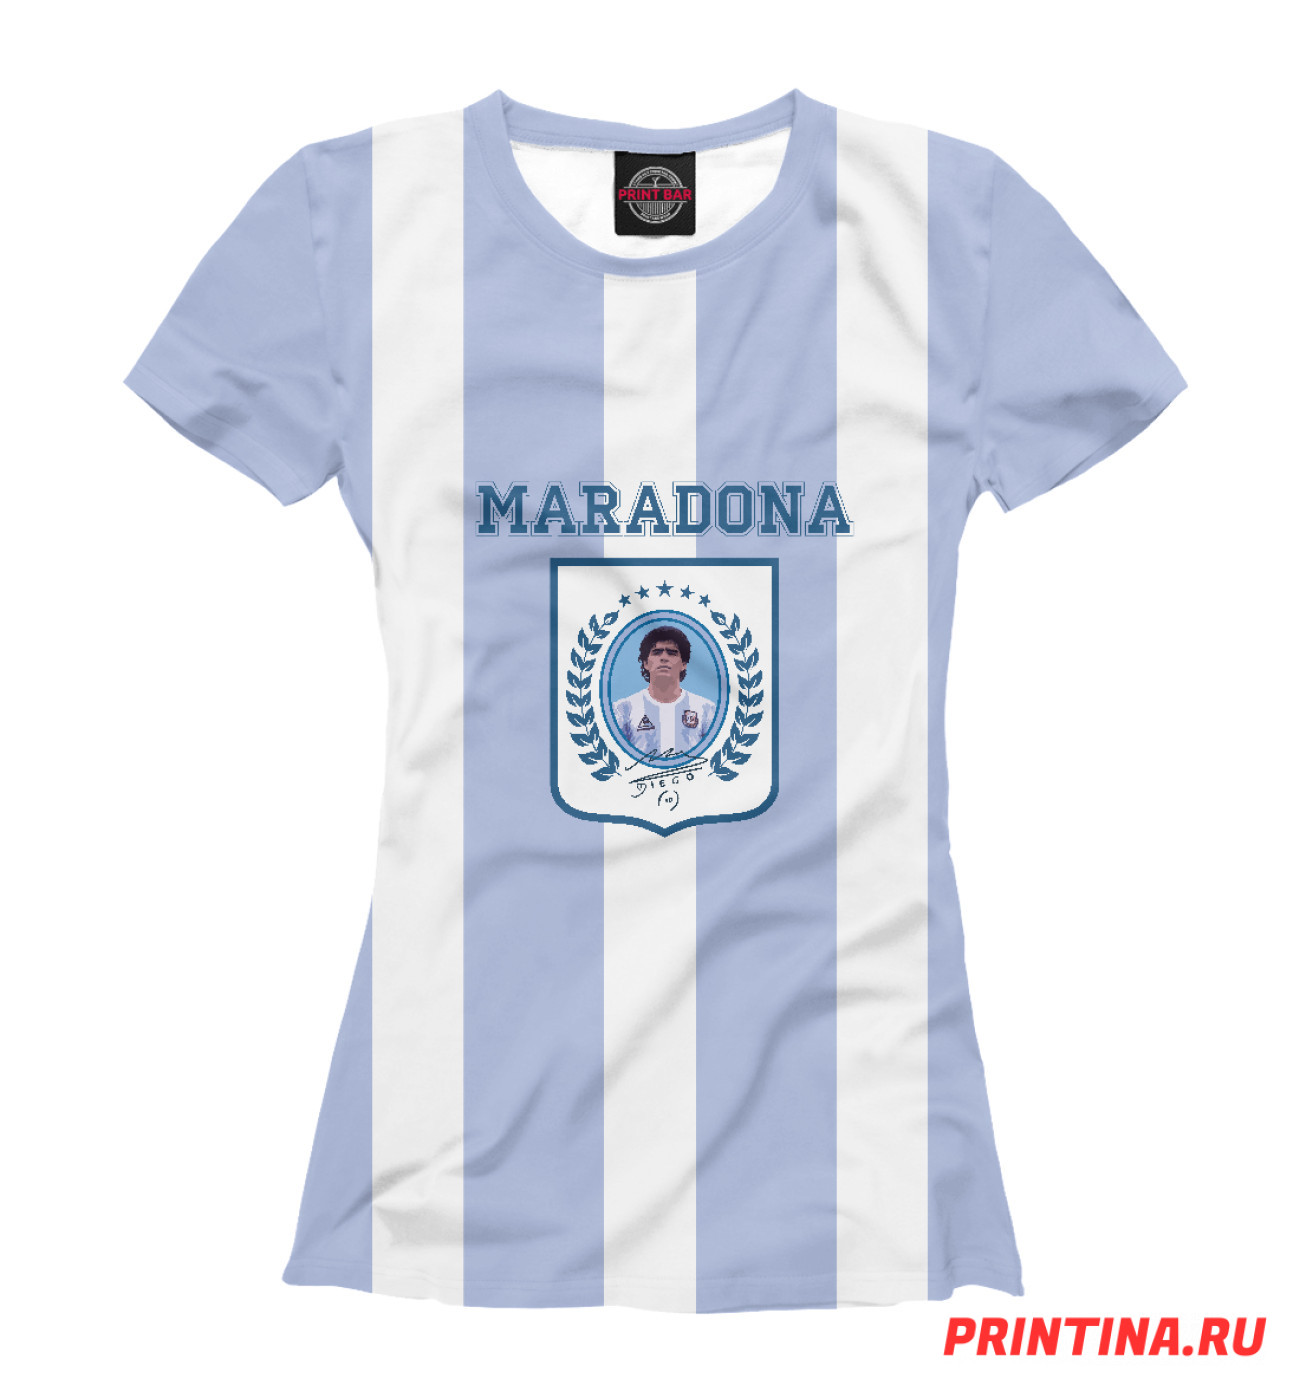 Женская Футболка Maradona, артикул: FTO-660229-fut-1